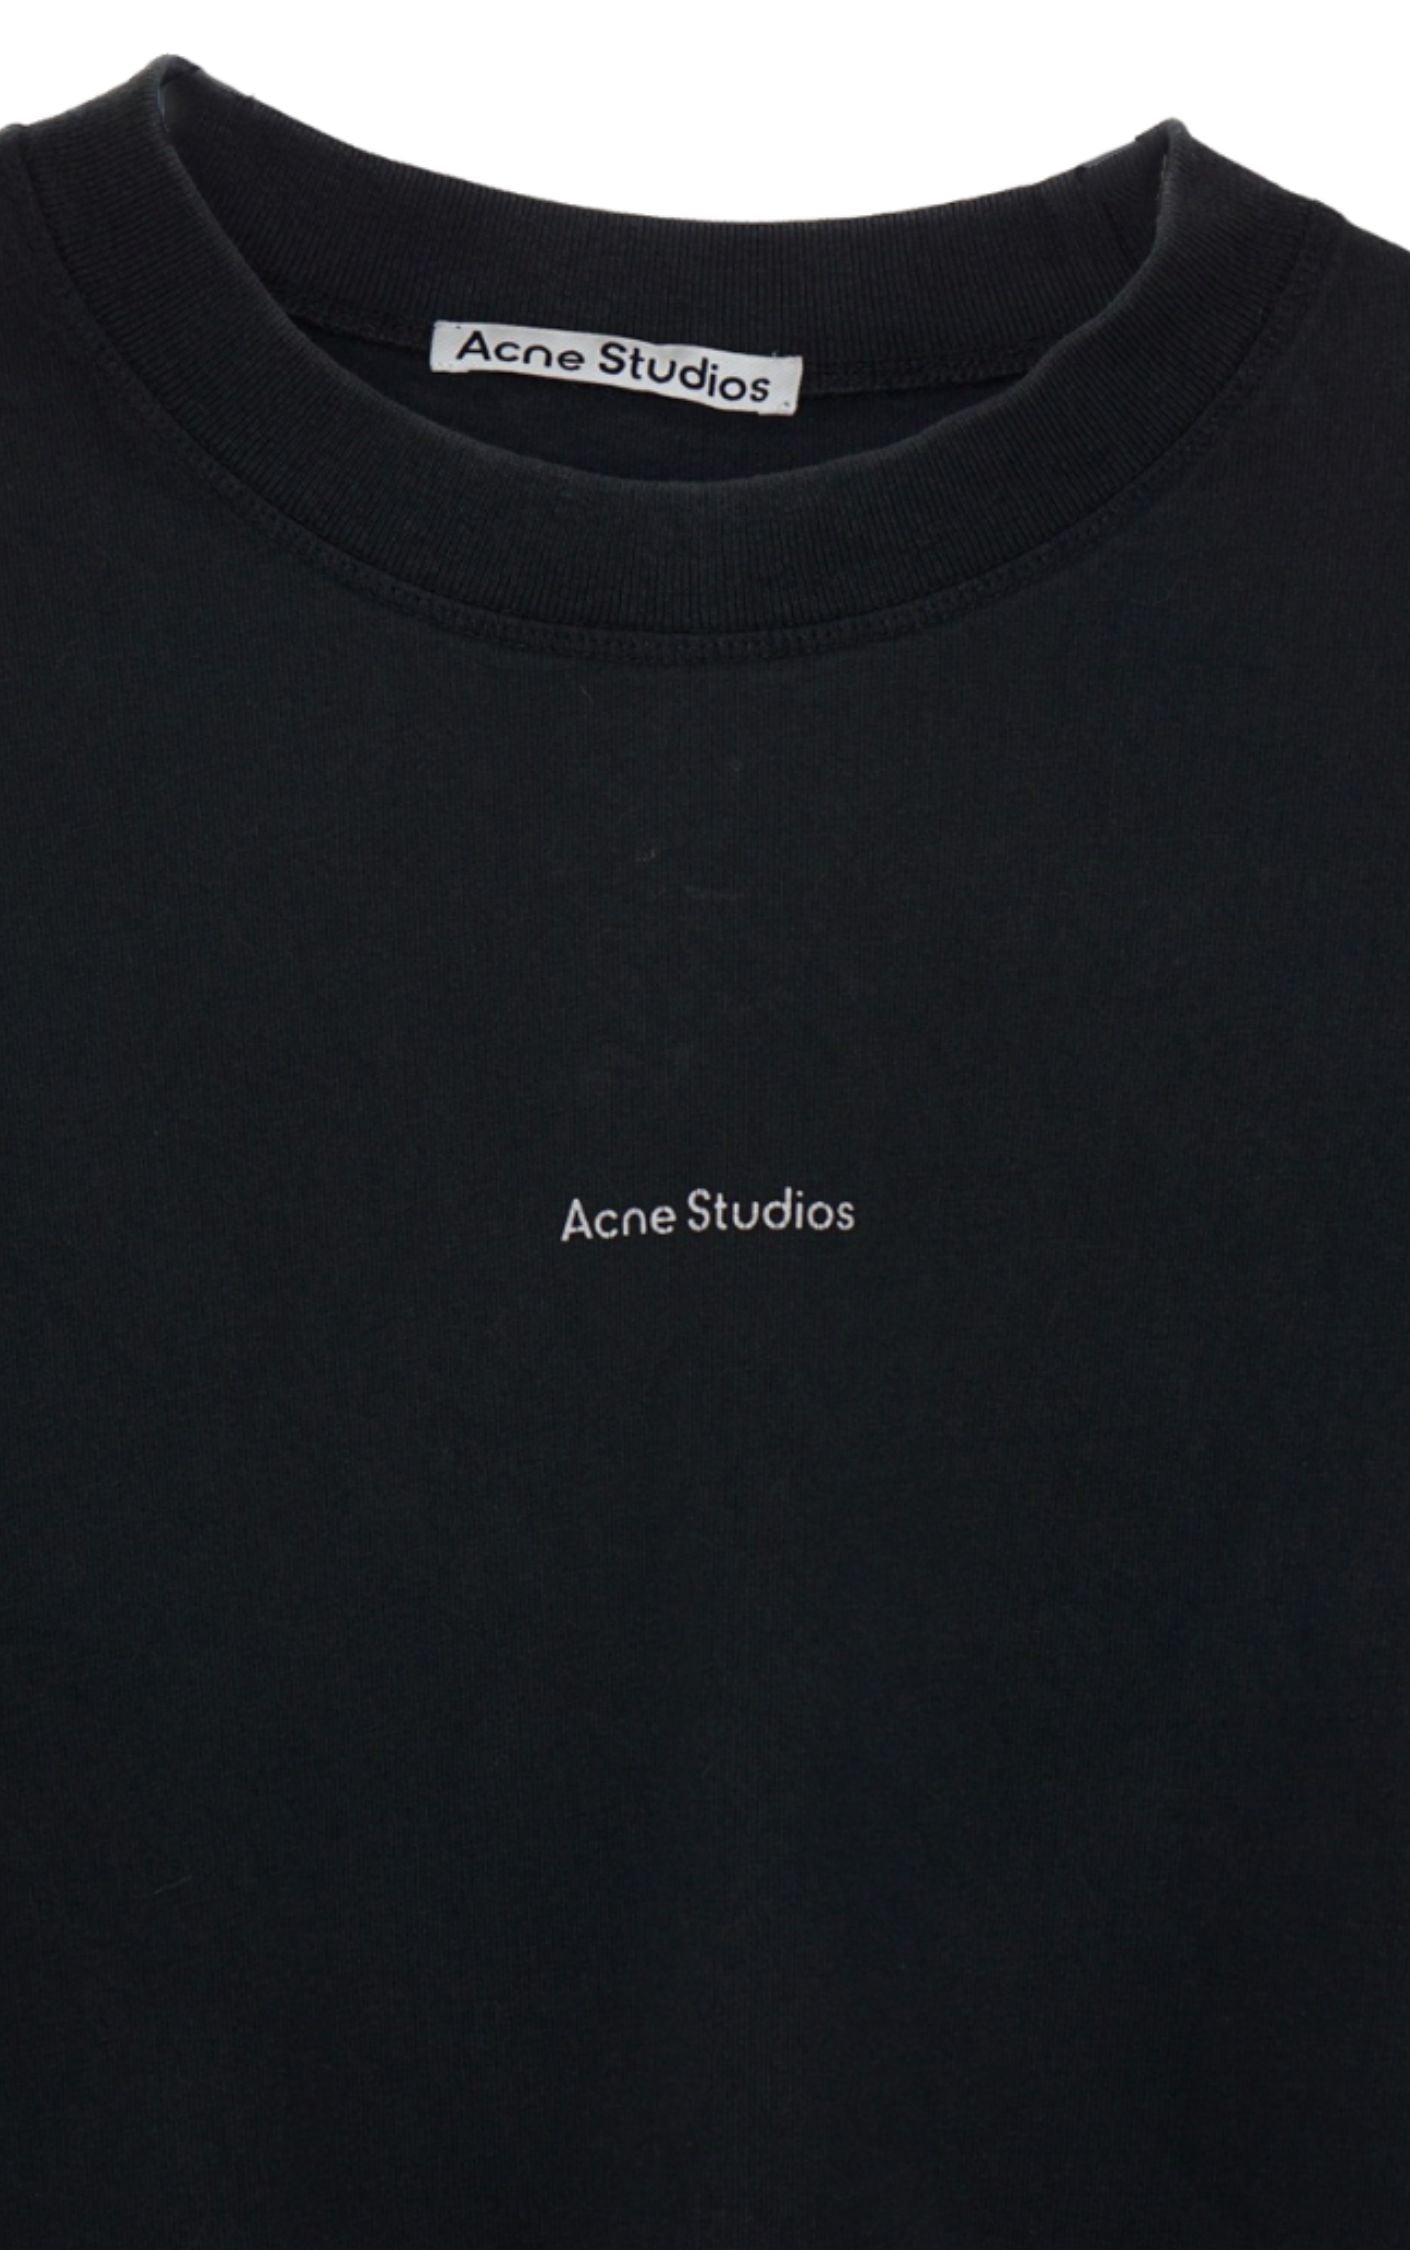 ACNE STUDIOS Logo Black T-Shirt resellum